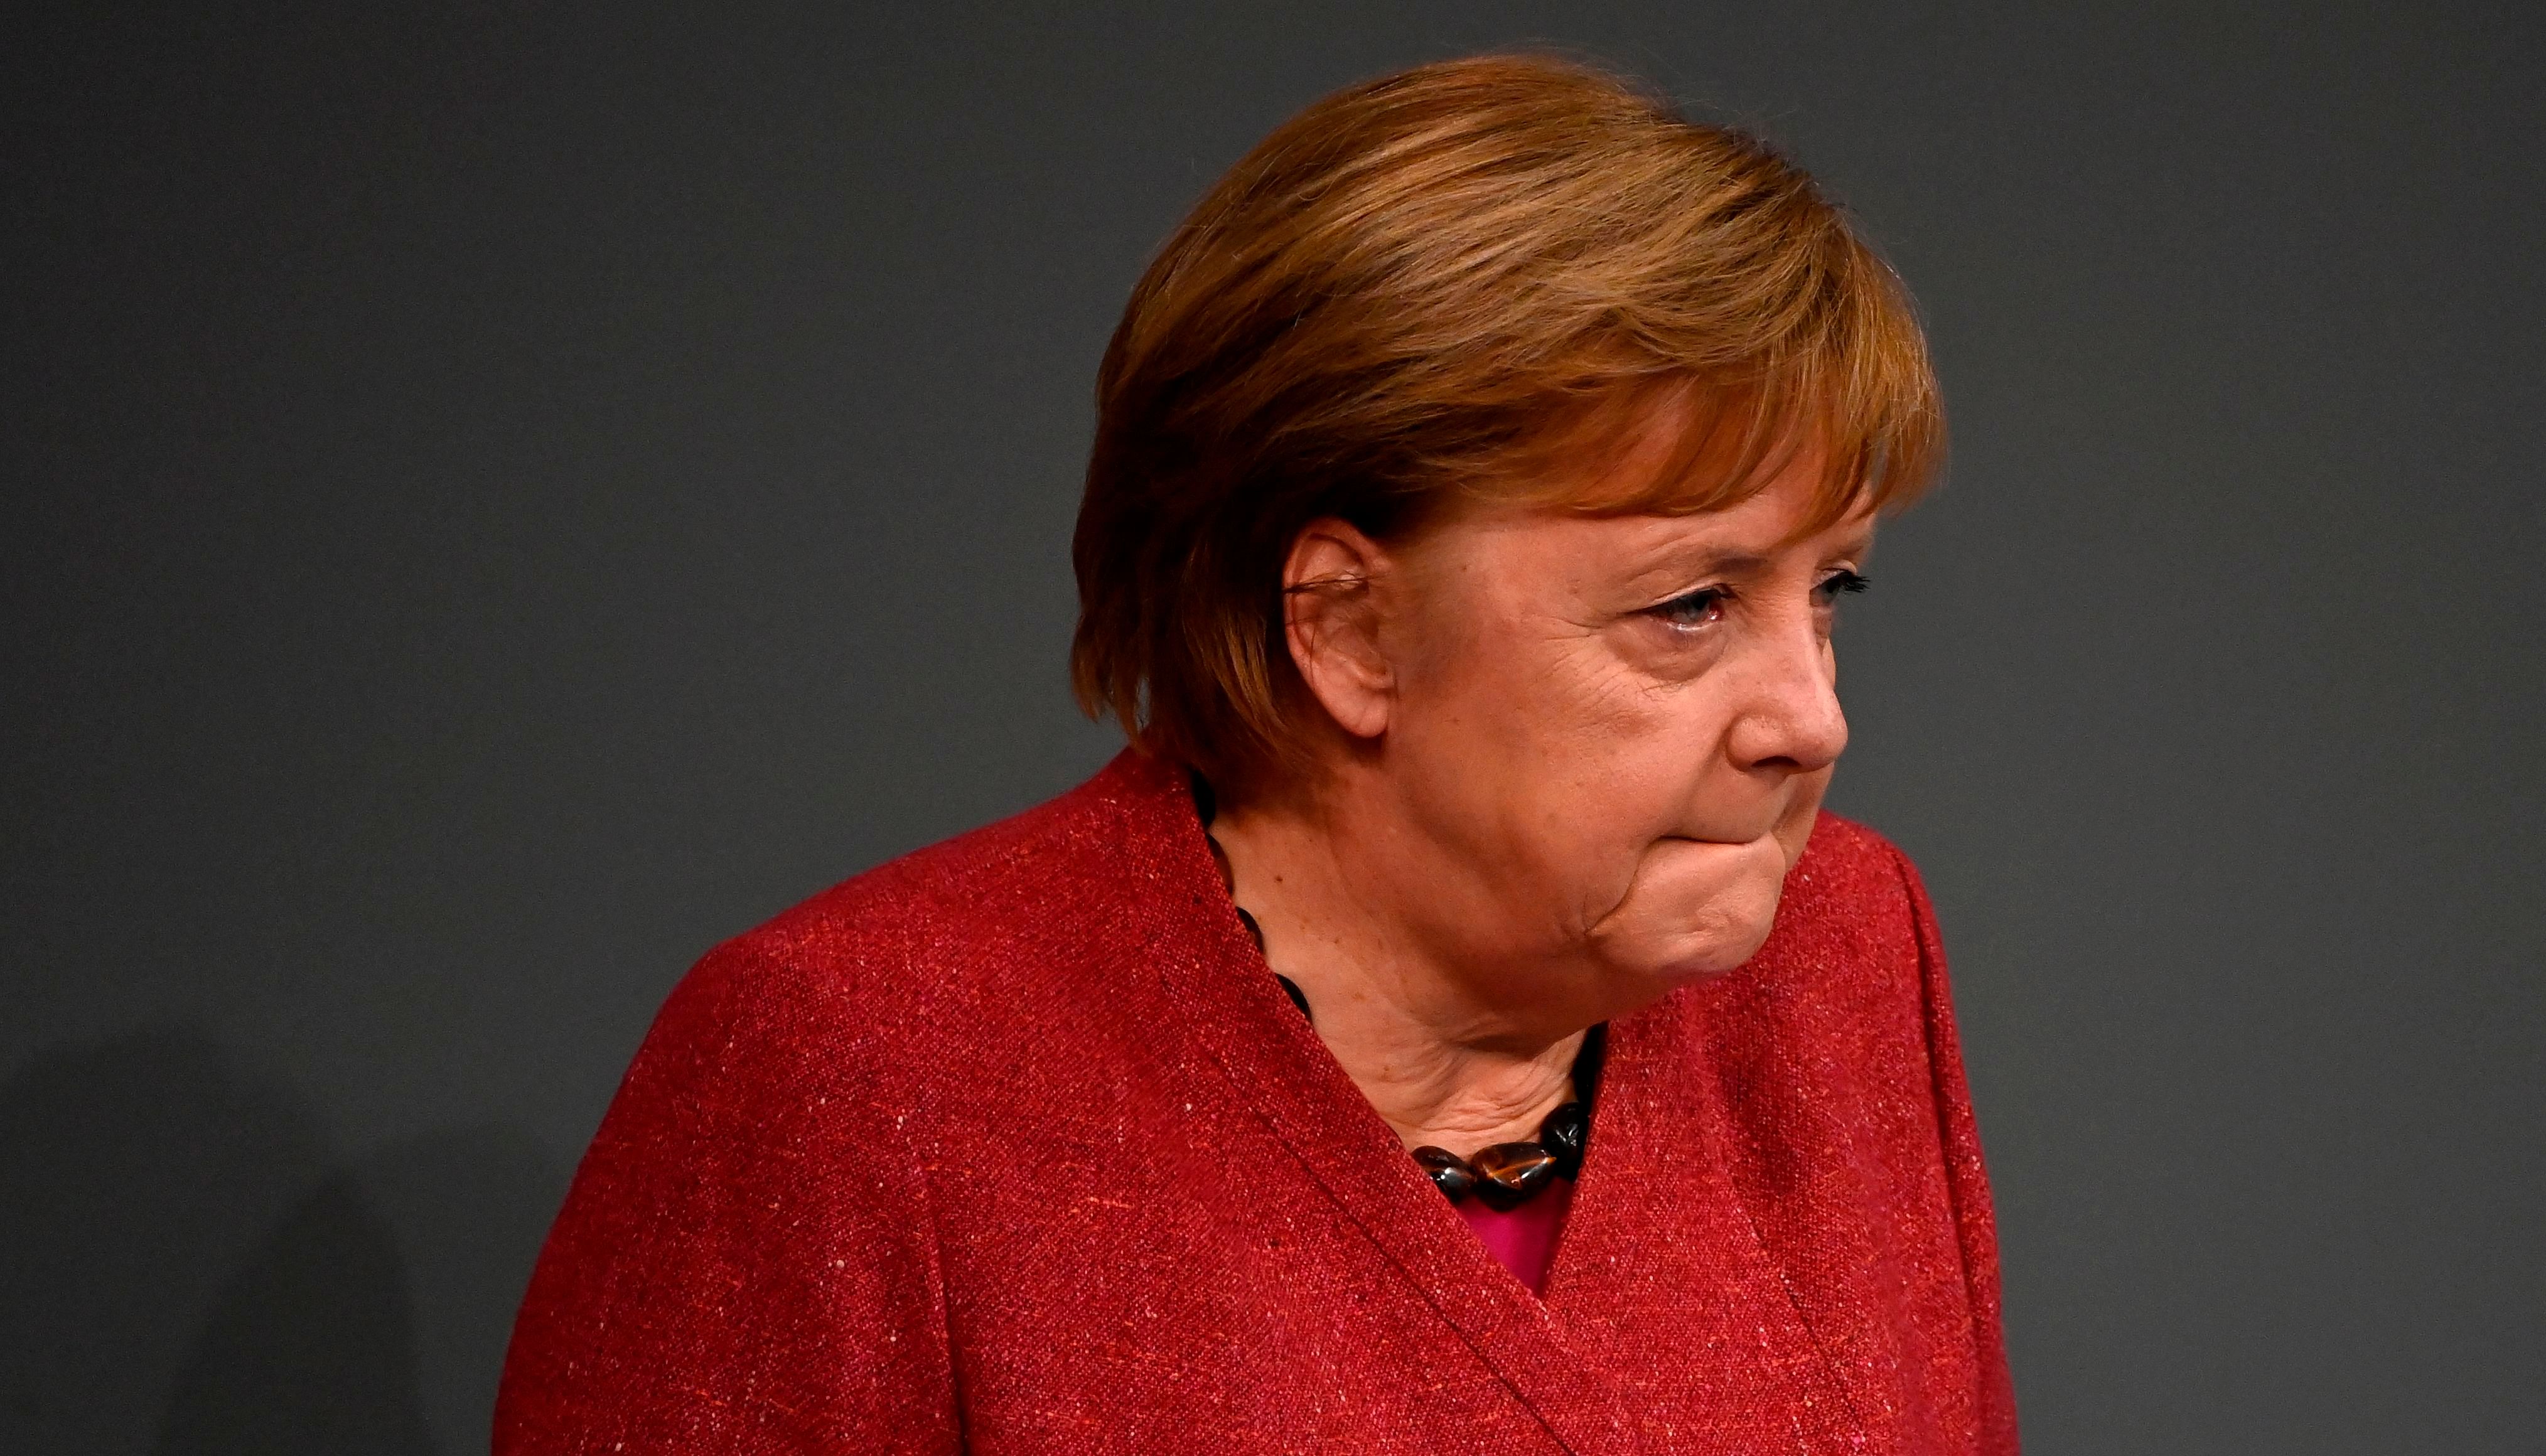 German Chancellor Angela Merkel. Credit: AFP Photo